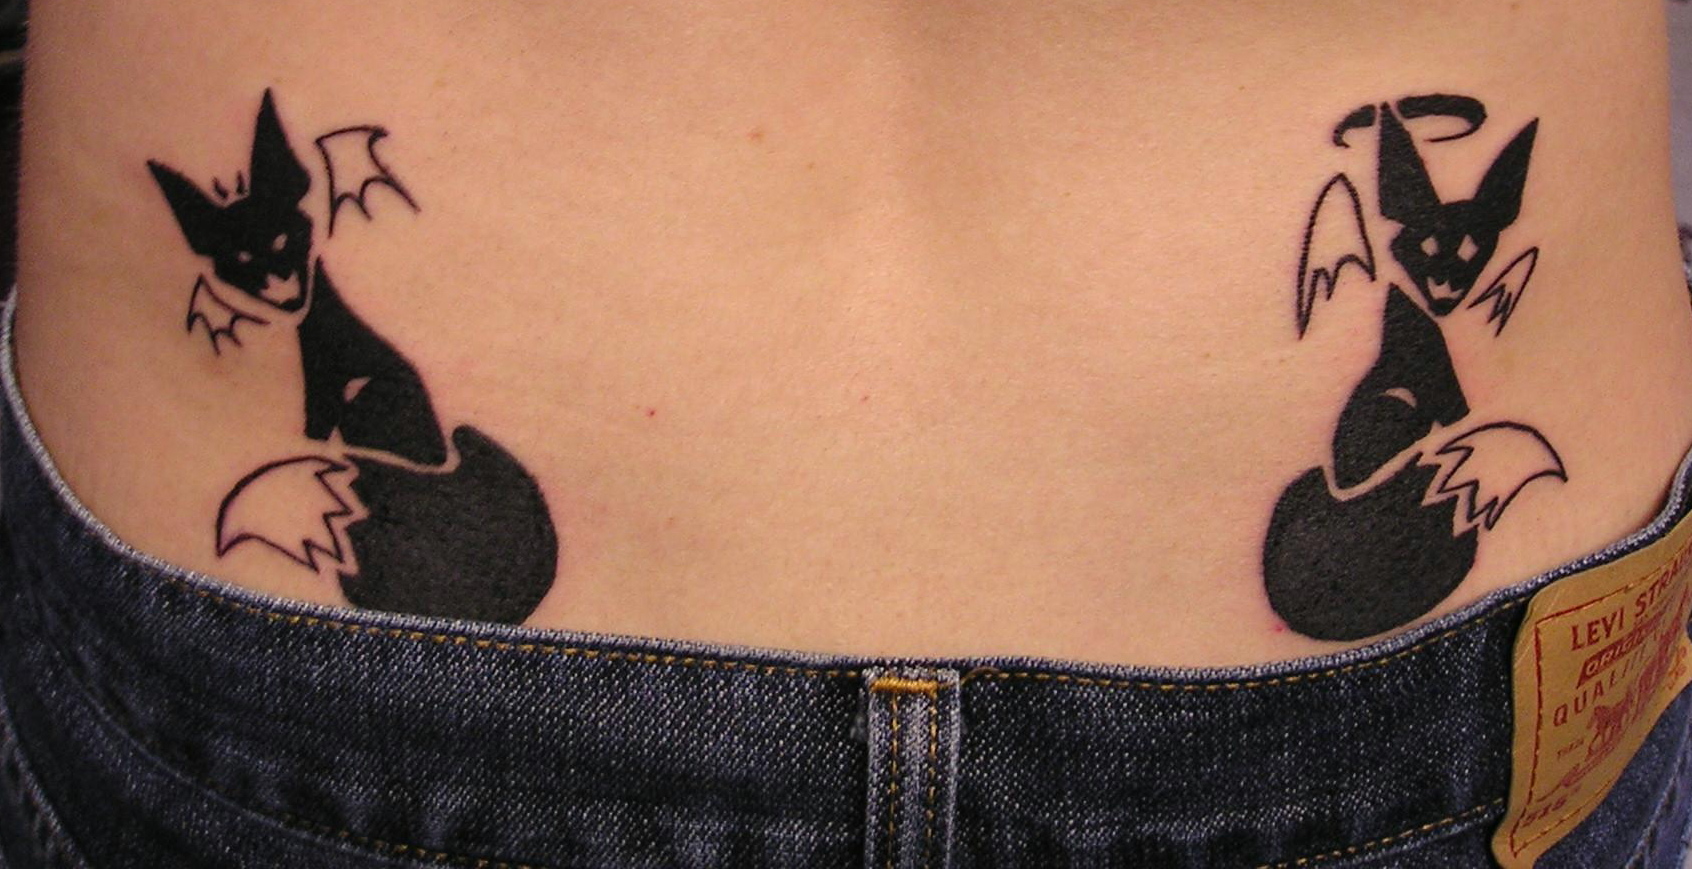 Lower back tattoos